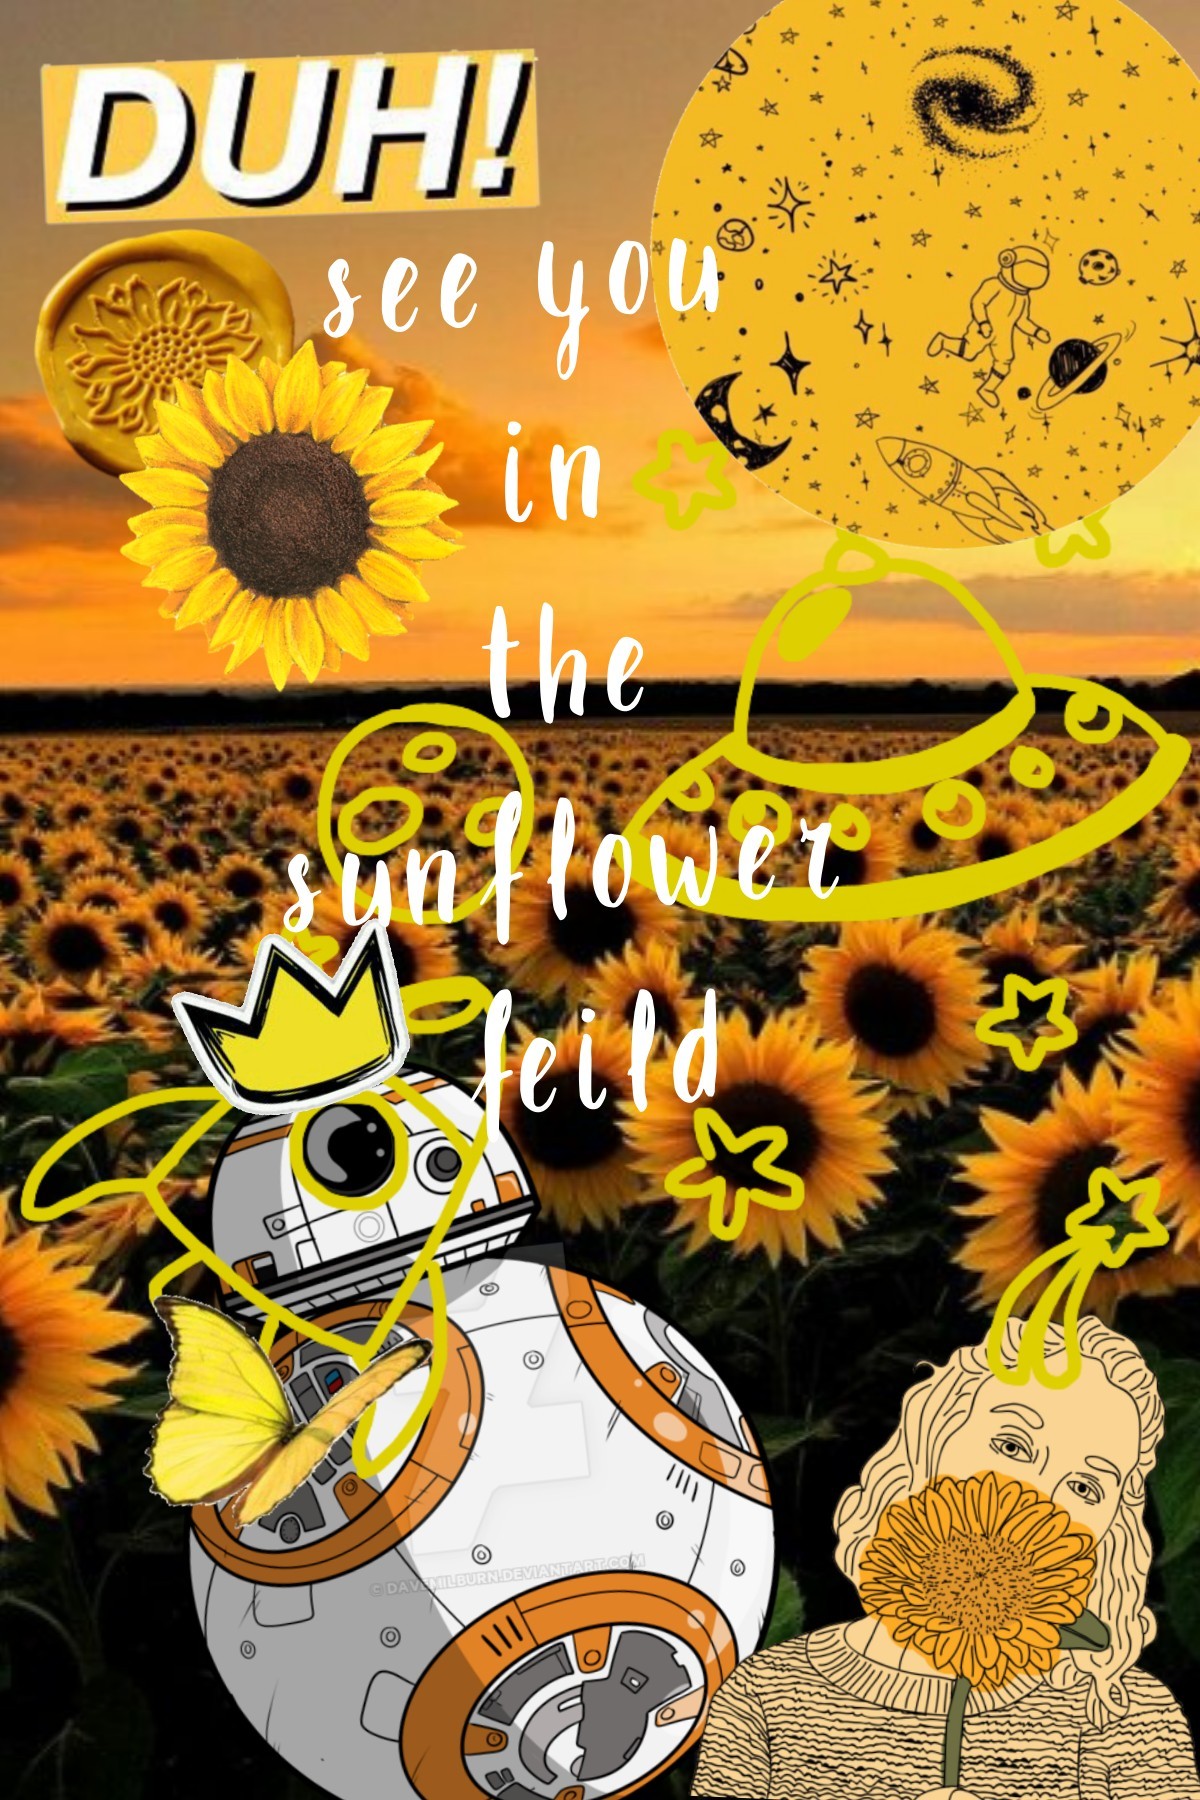 follow me at _sunflower_1667 